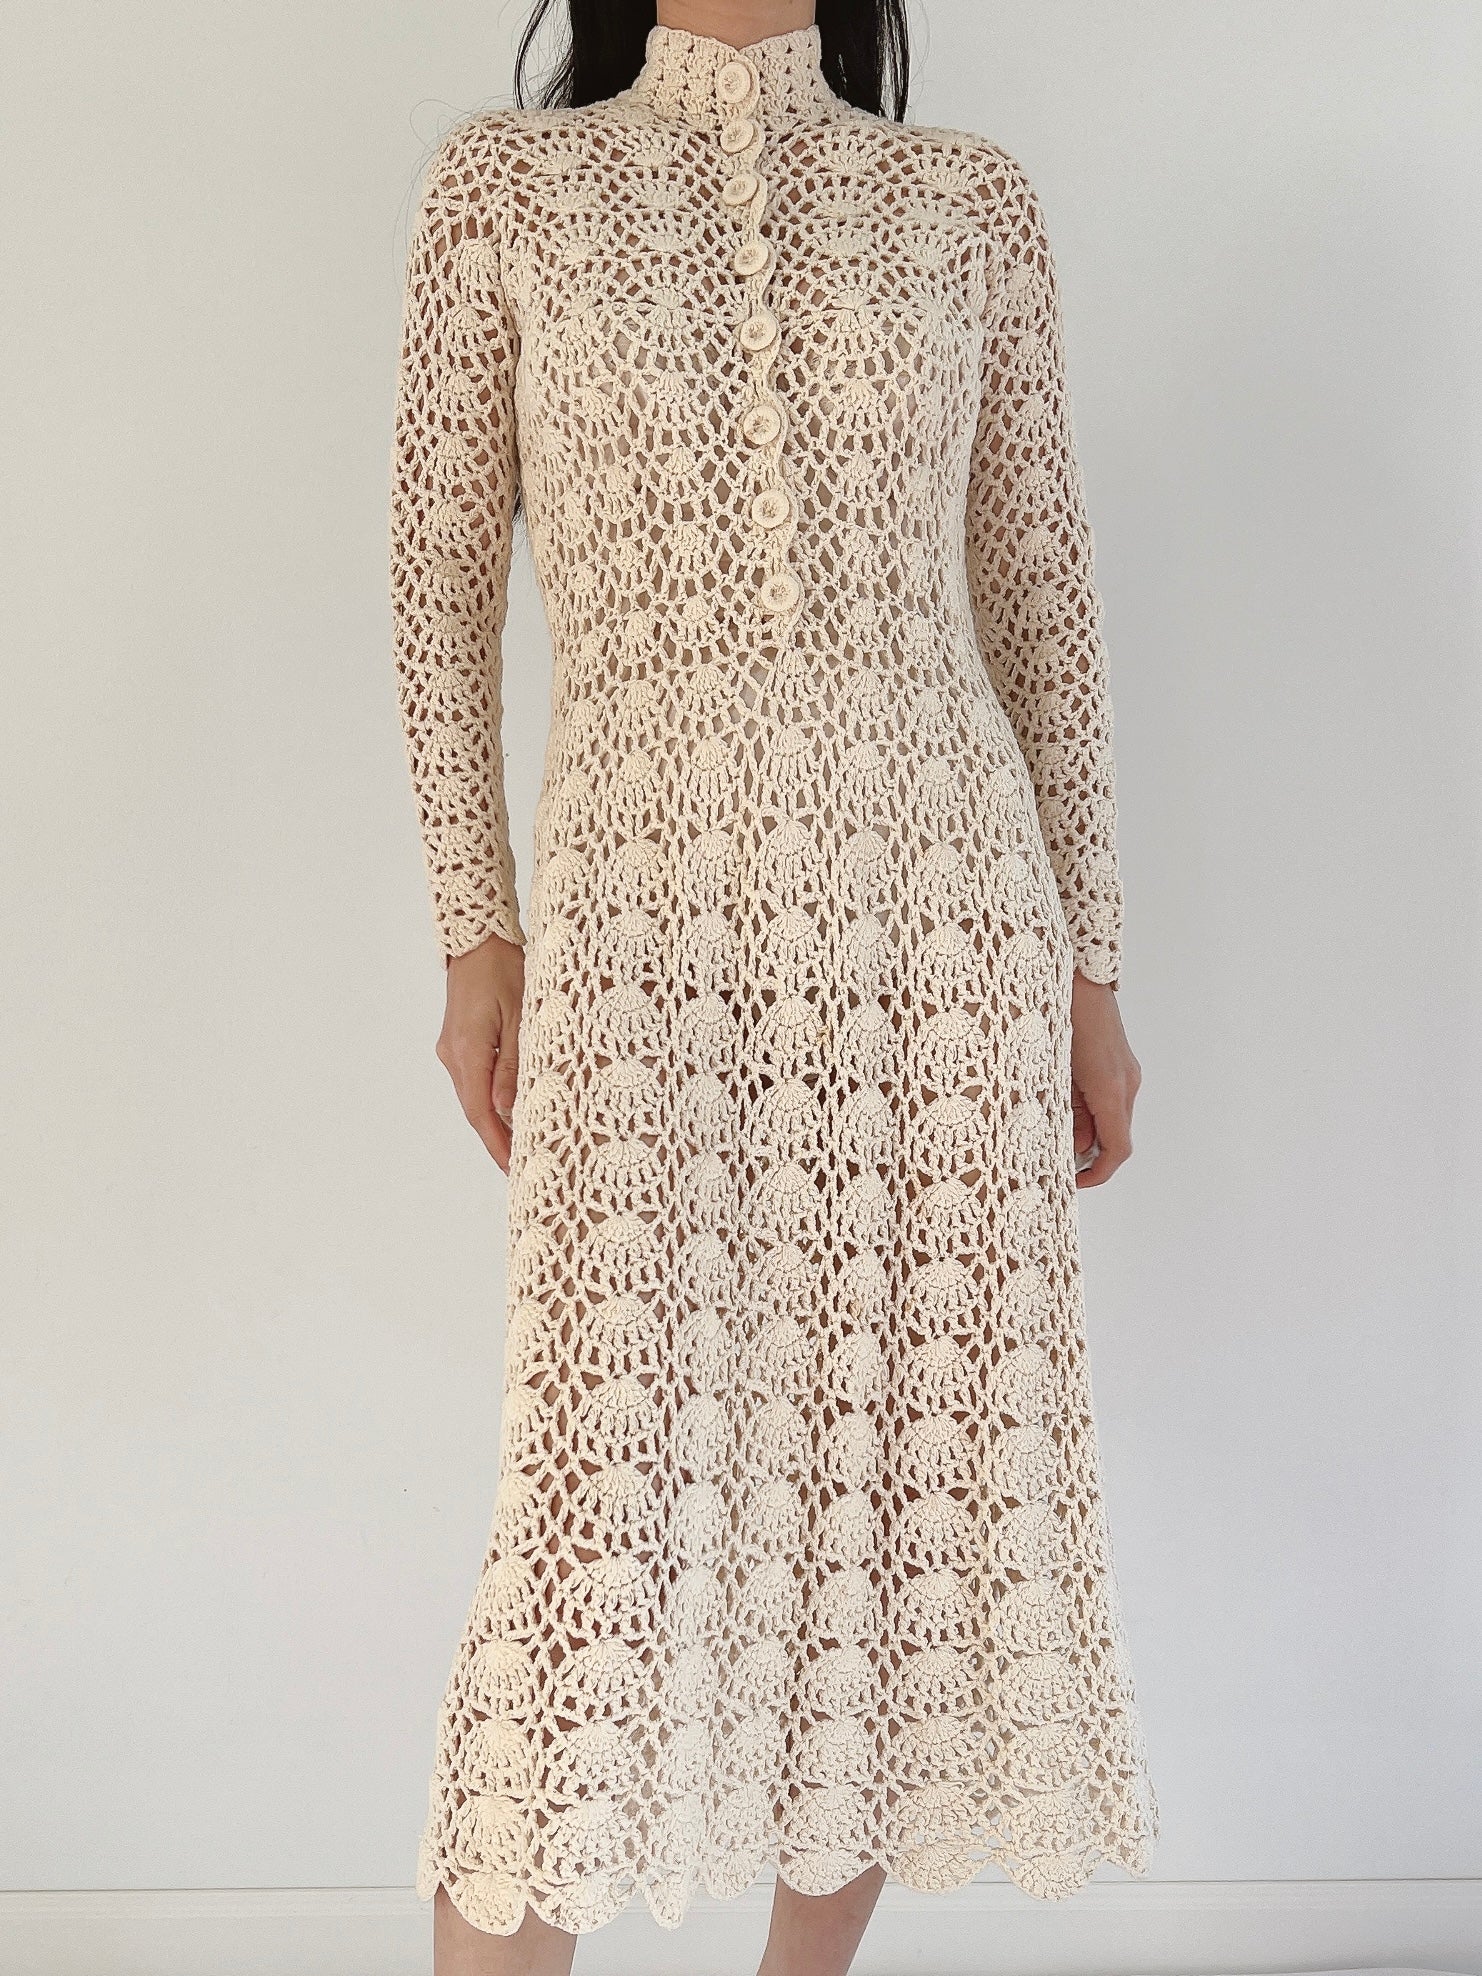 1970s Long Sleeves Crochet Dress - XS-M